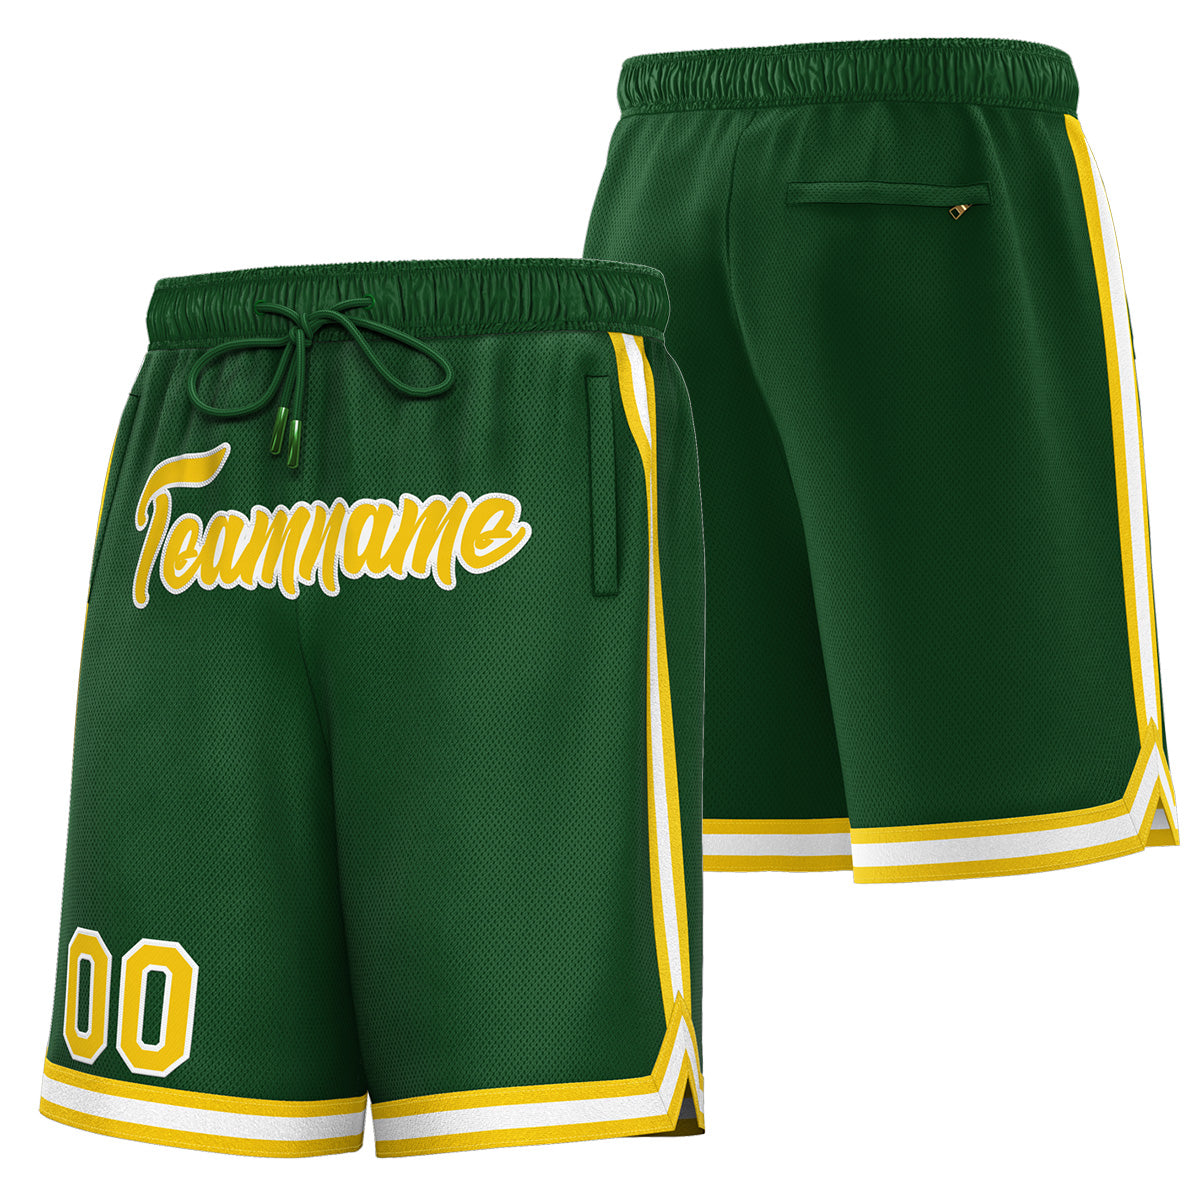 kxk custom green basketball shorts